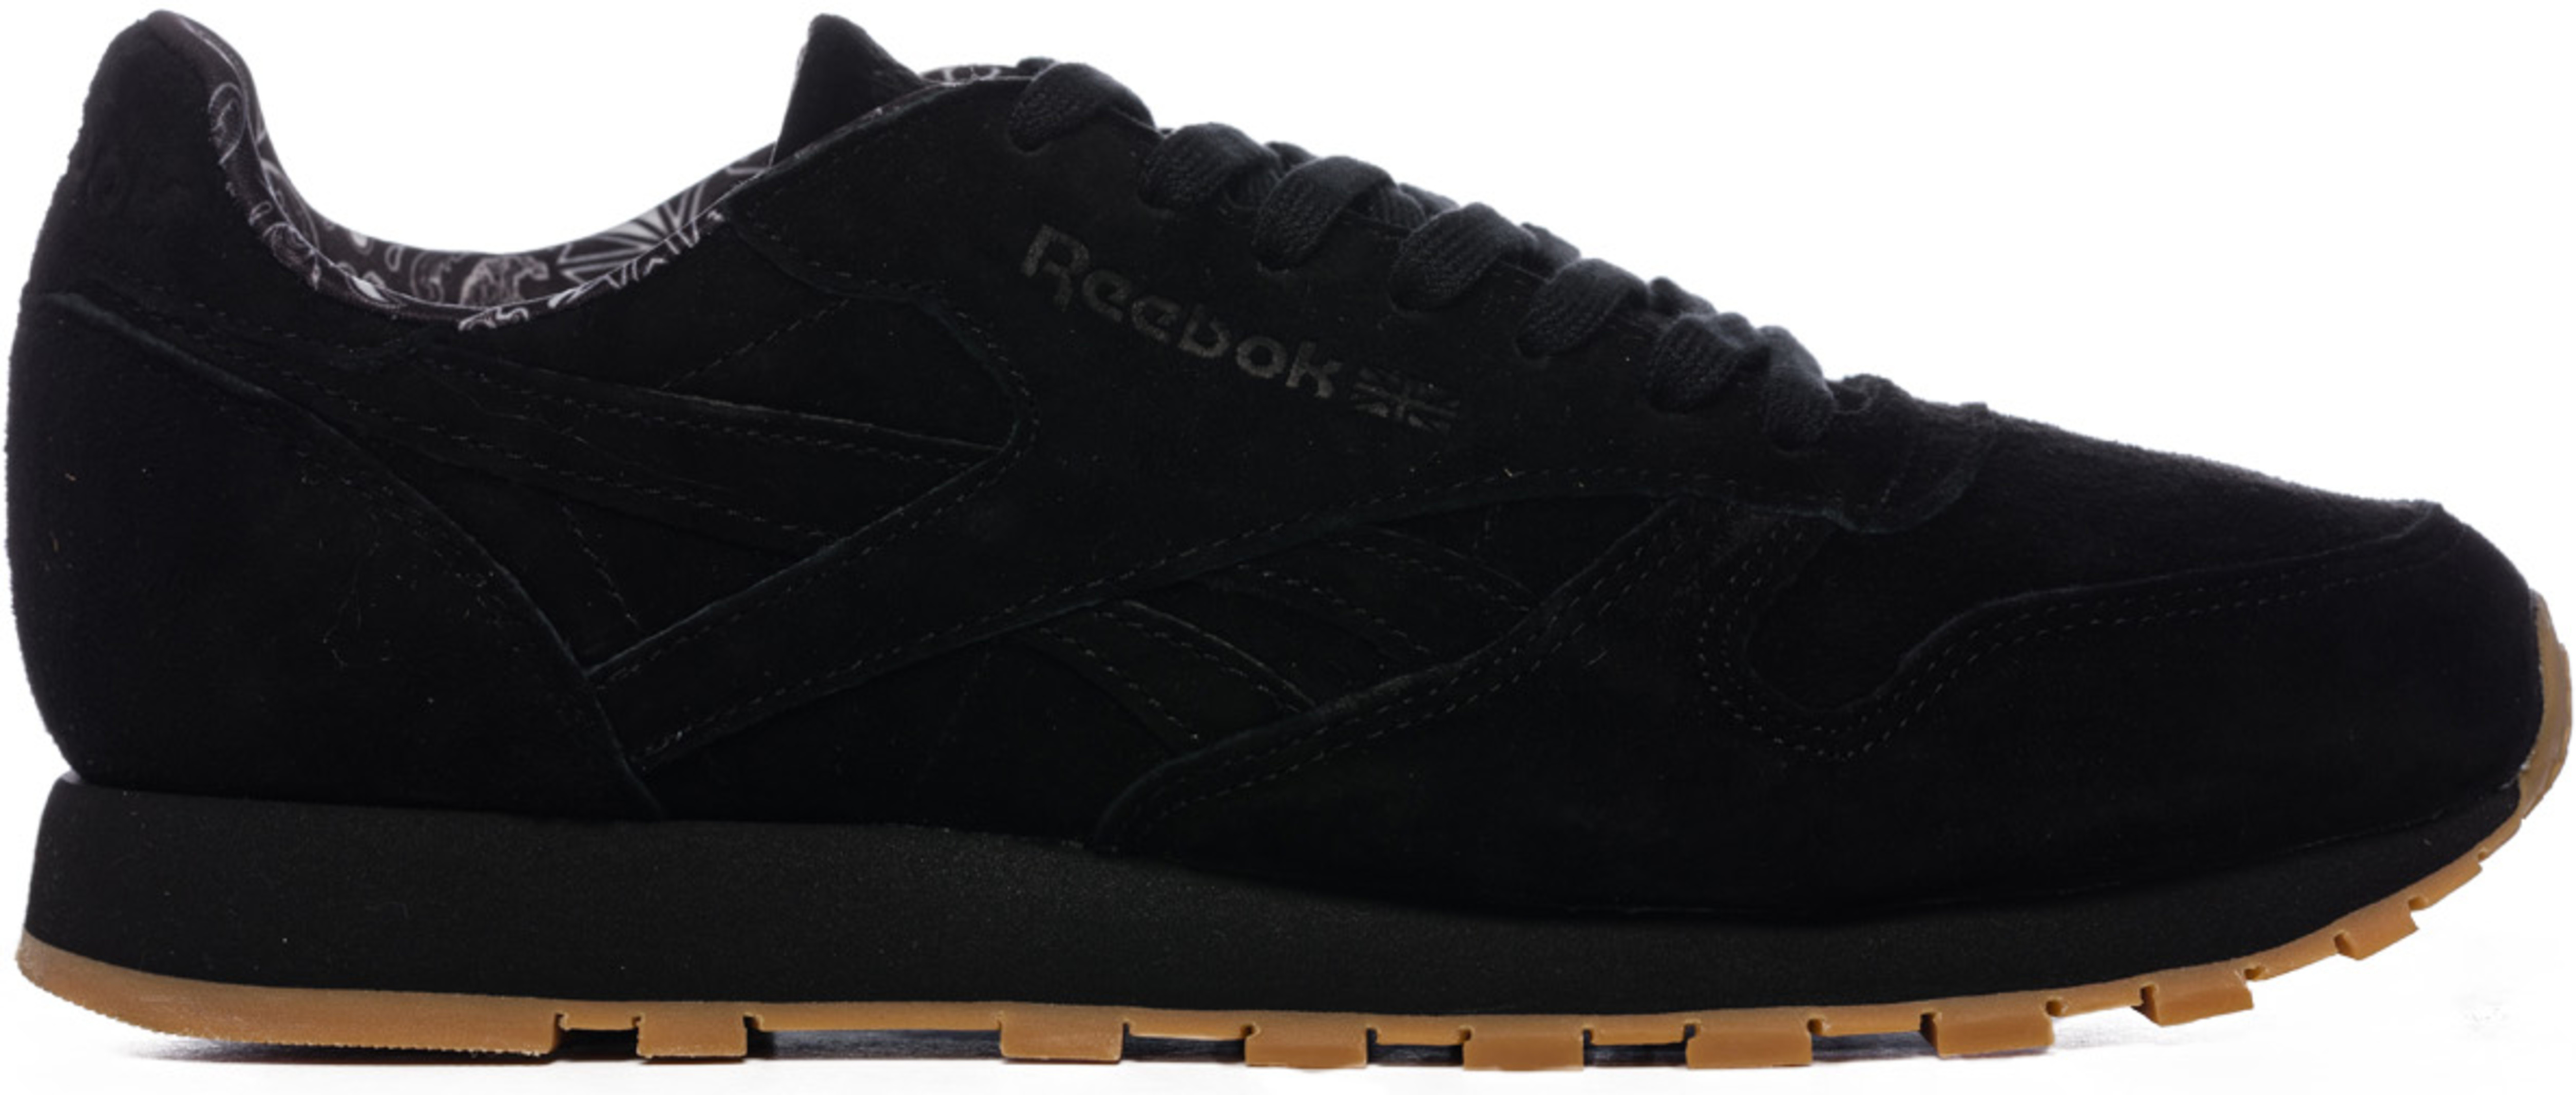 reebok classic leather tdc black